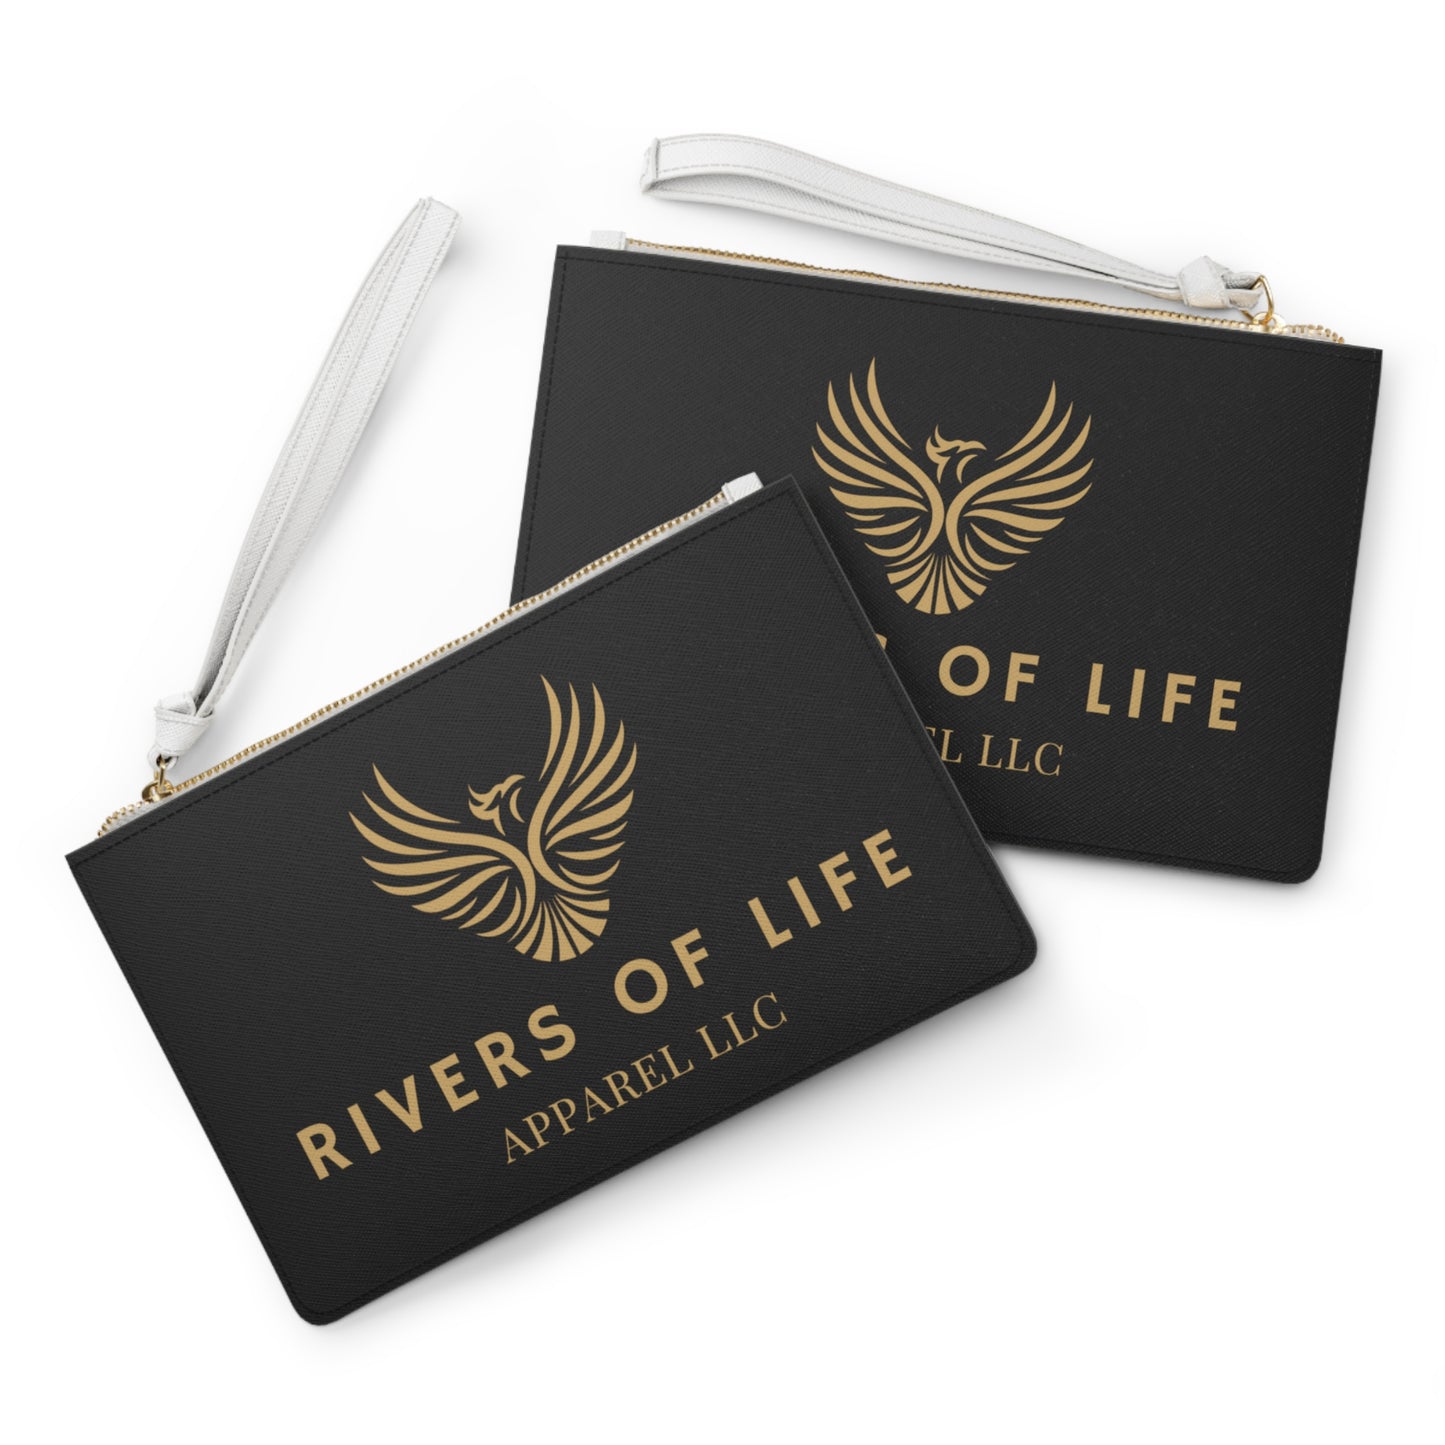 Rivers of Life - Clutch Bag